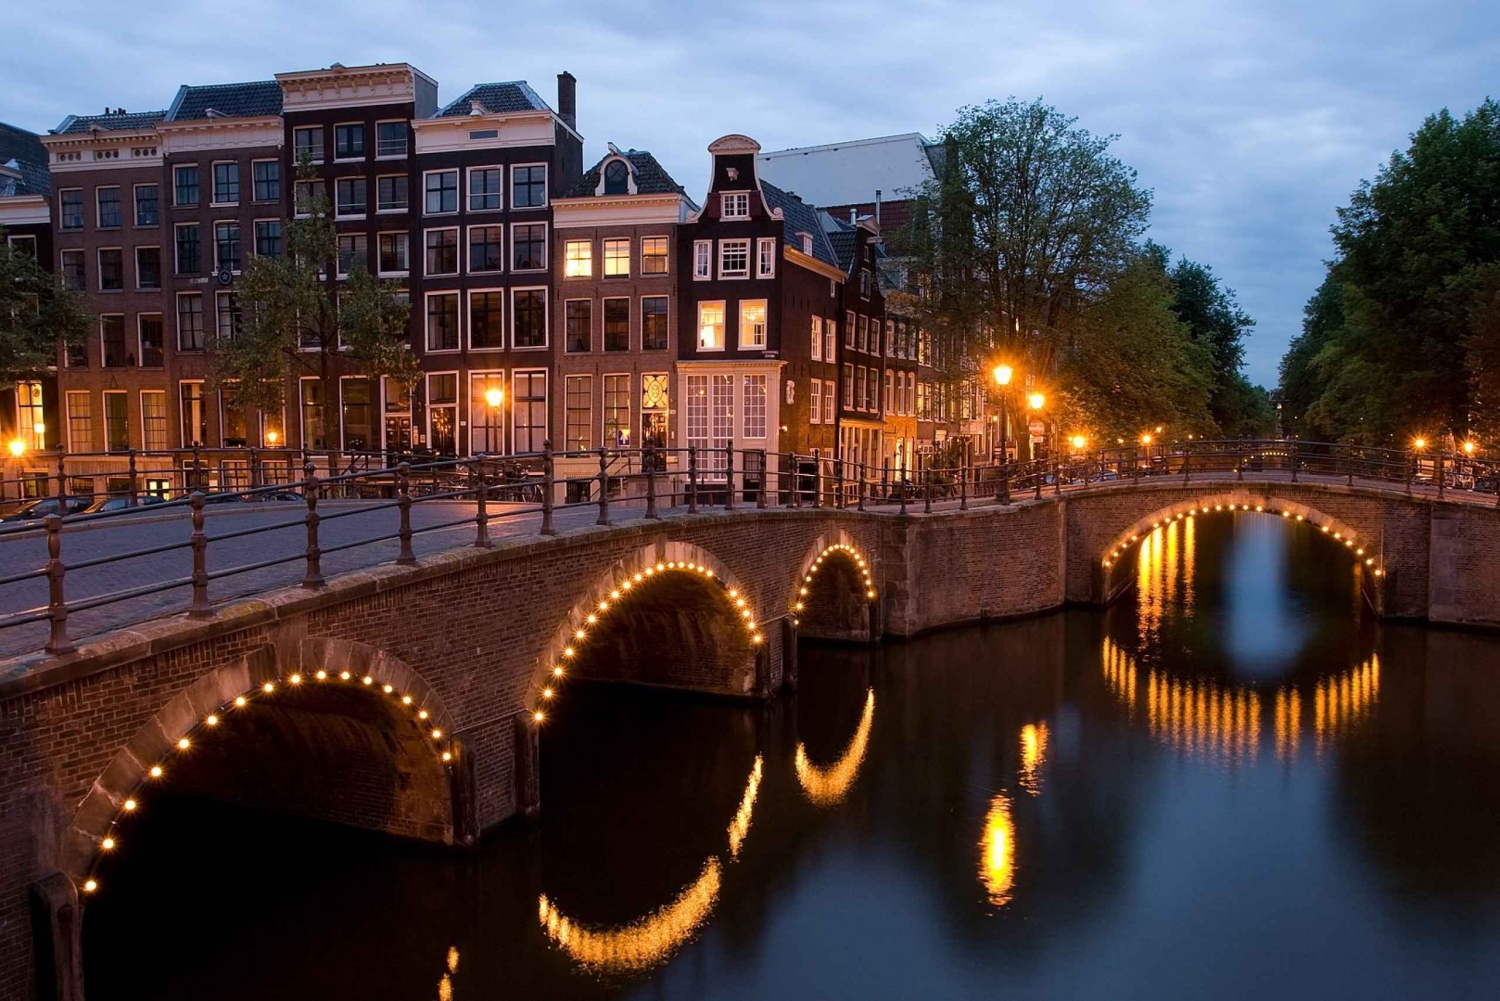 Amsterdam: Red Light District selvguidet lydtur